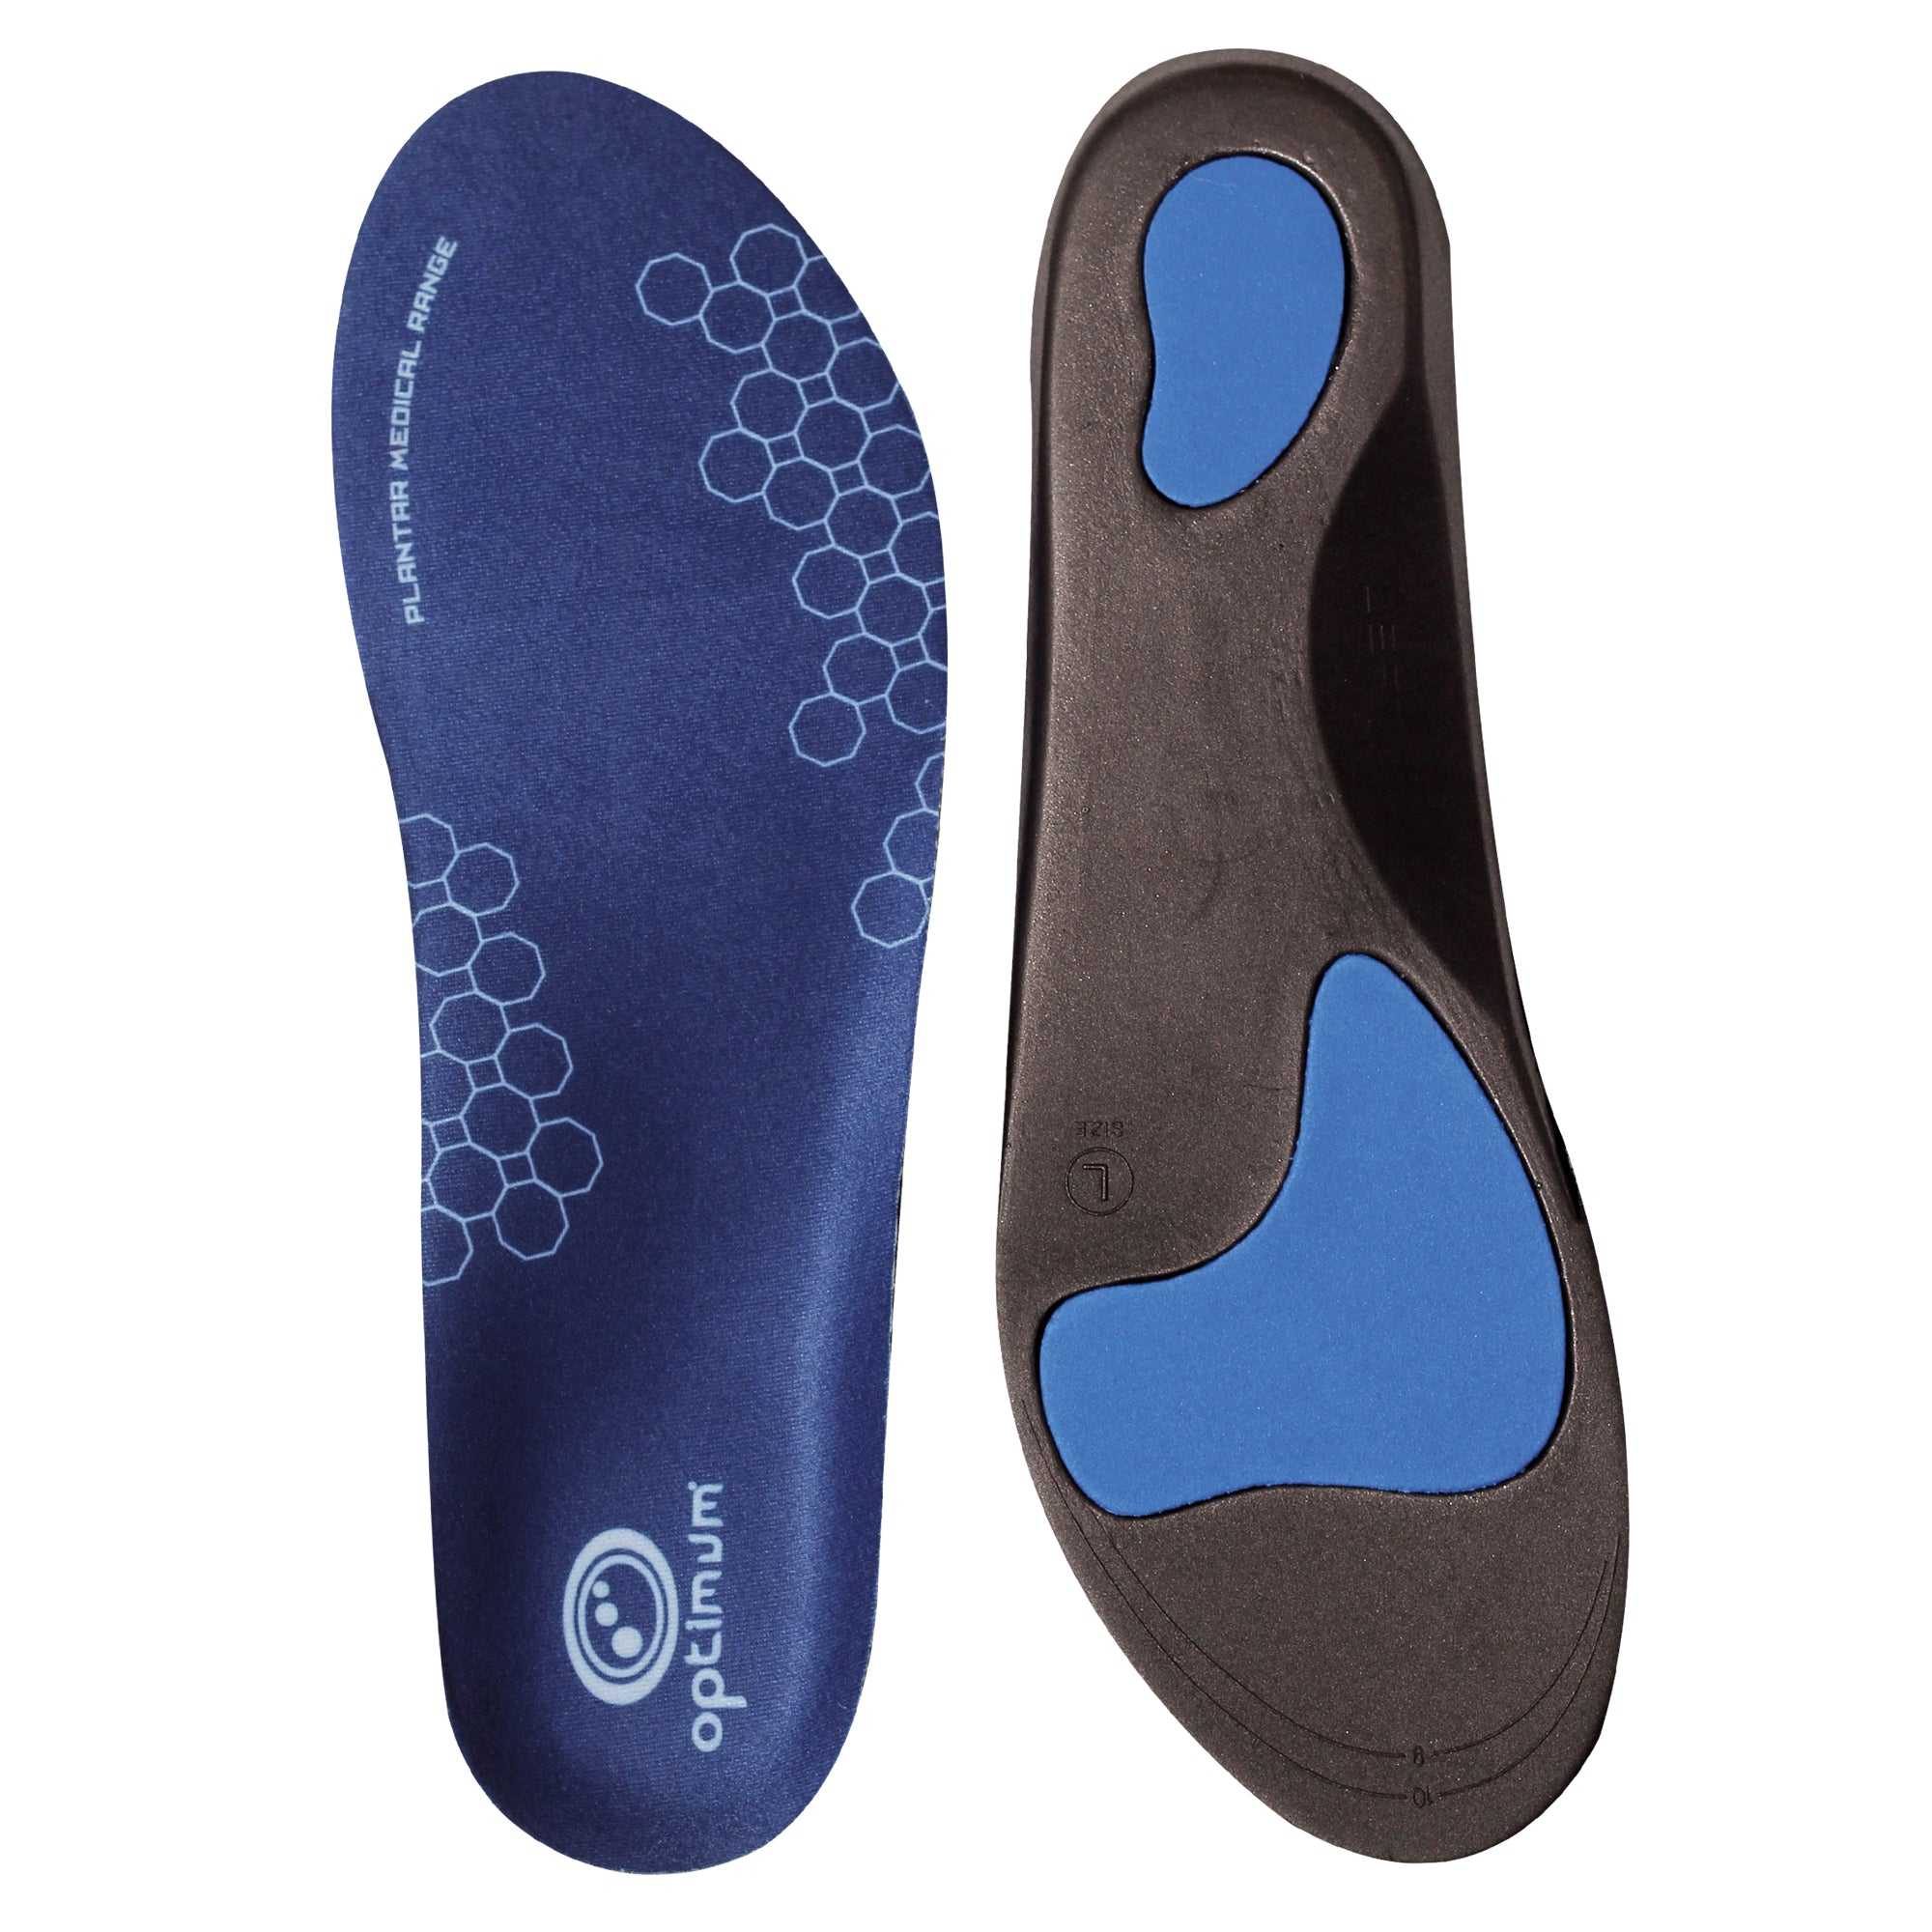 Plantar Fasciitis Insoles Shoes Foot Heel Relief Support - Optimum